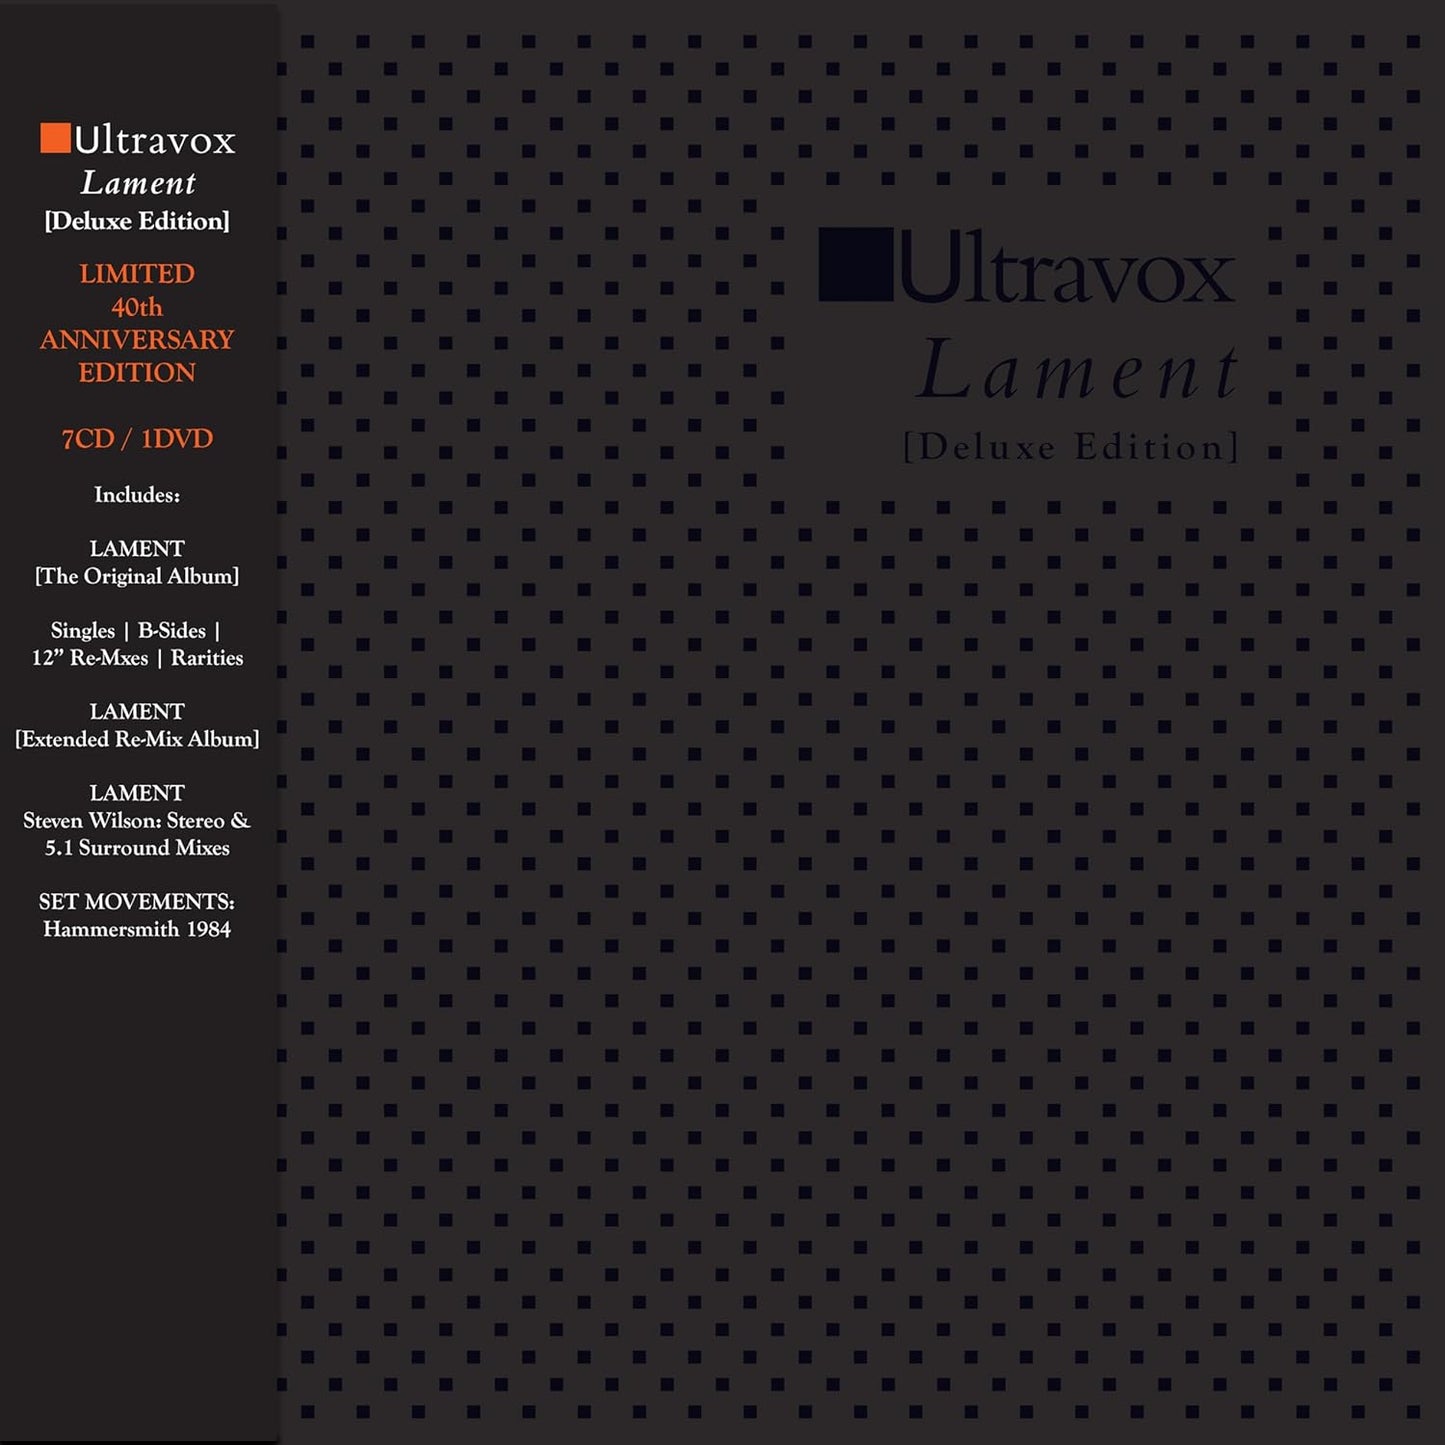 Ultravox / Lament 7CD+DVD deluxe edition